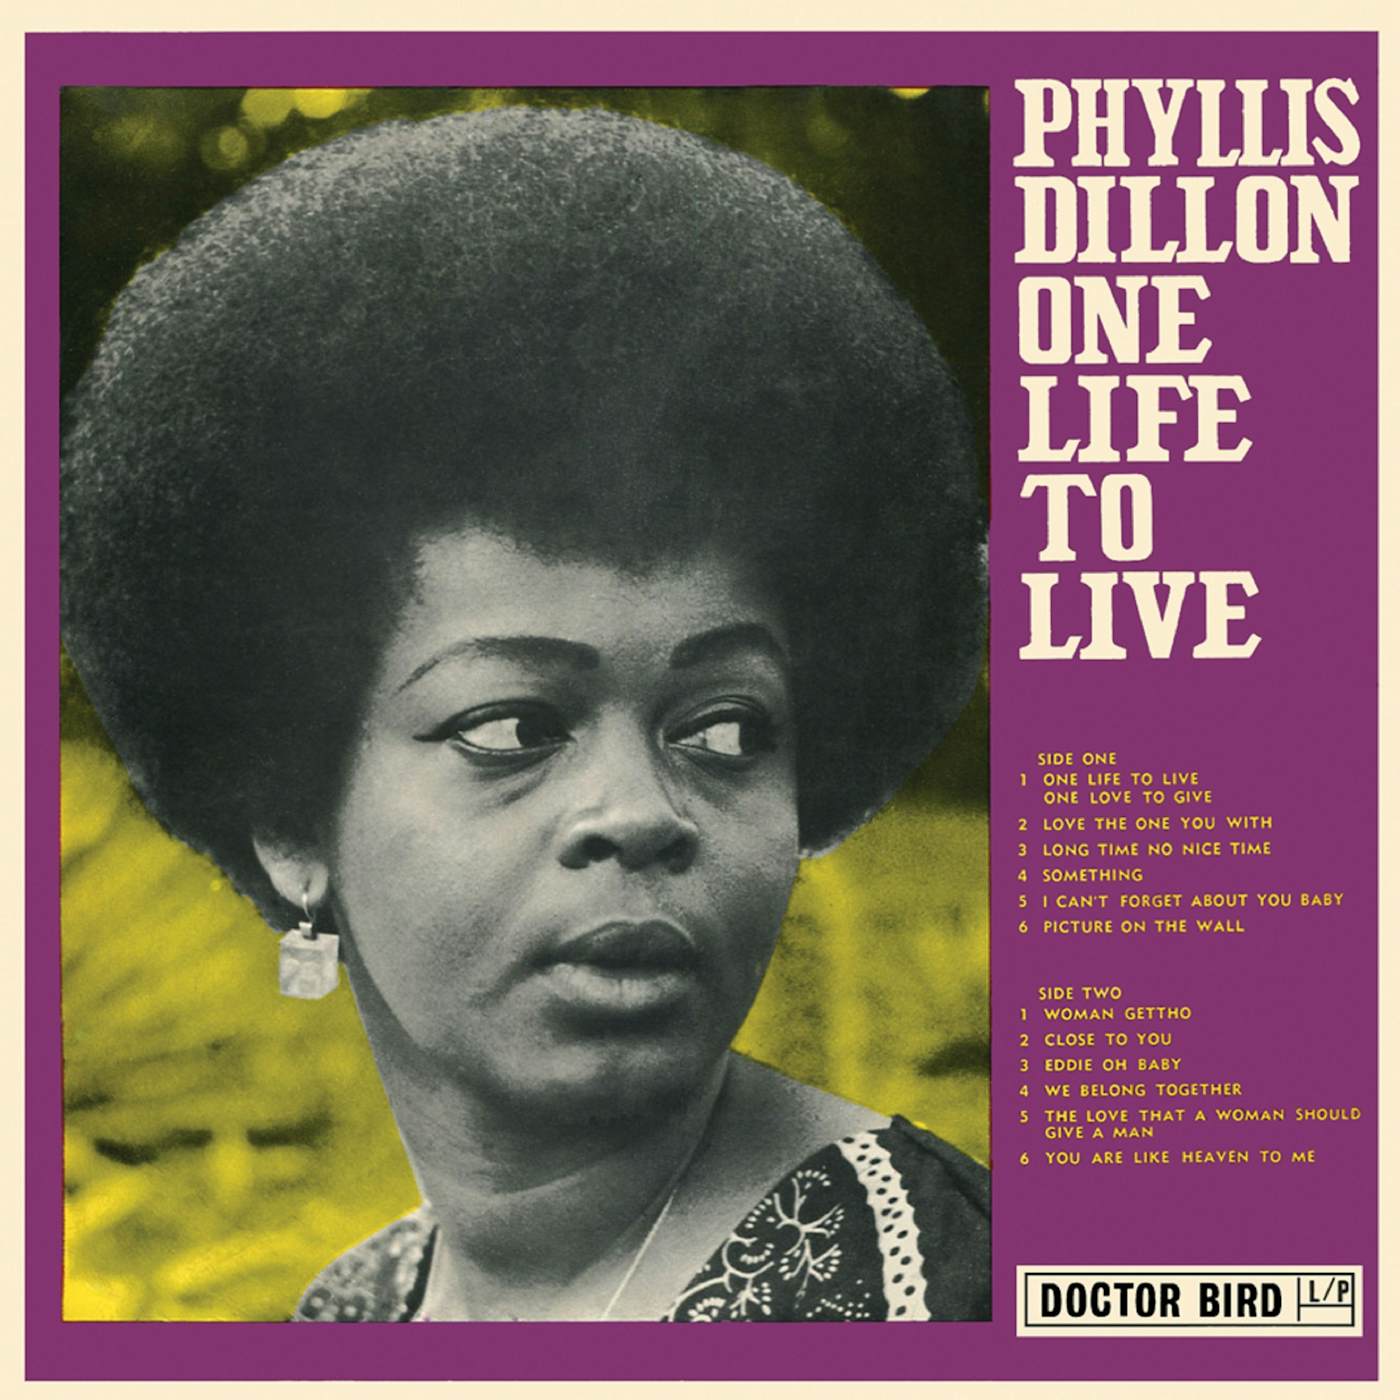 Phyllis Dillon ONE LIFE TO LIVE CD